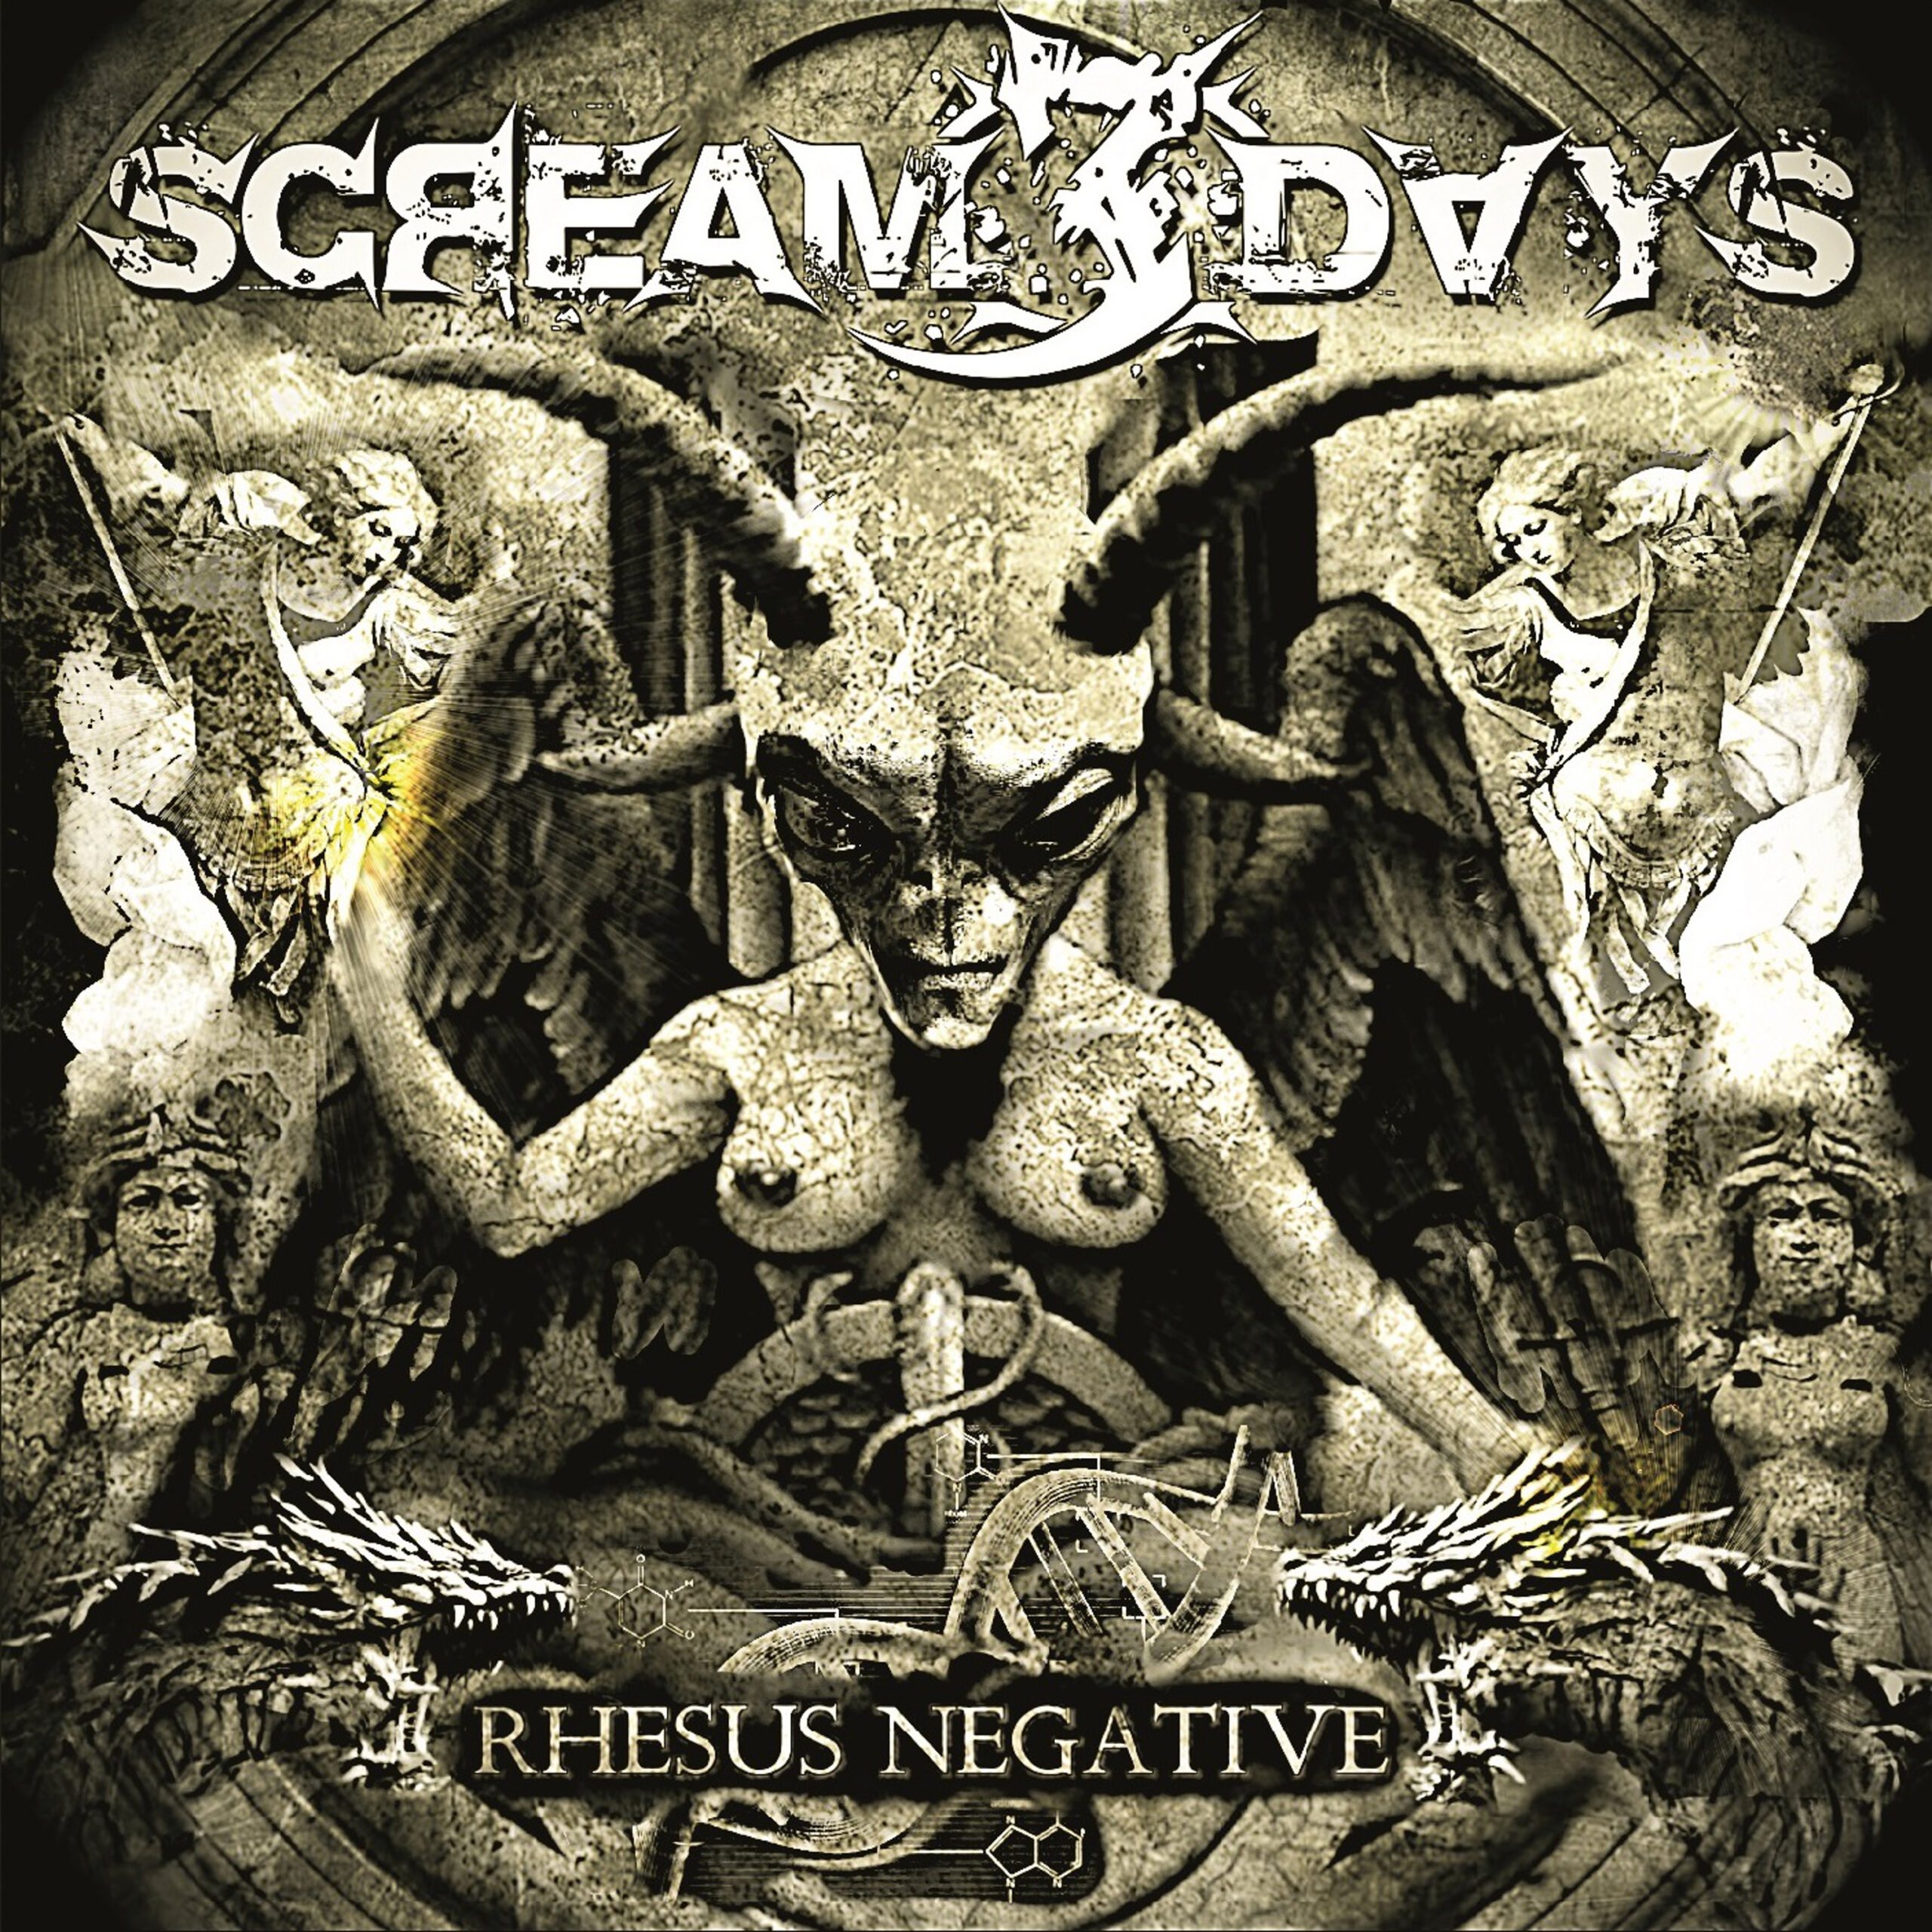 Scream 3 Days – “Rhesus Negative”